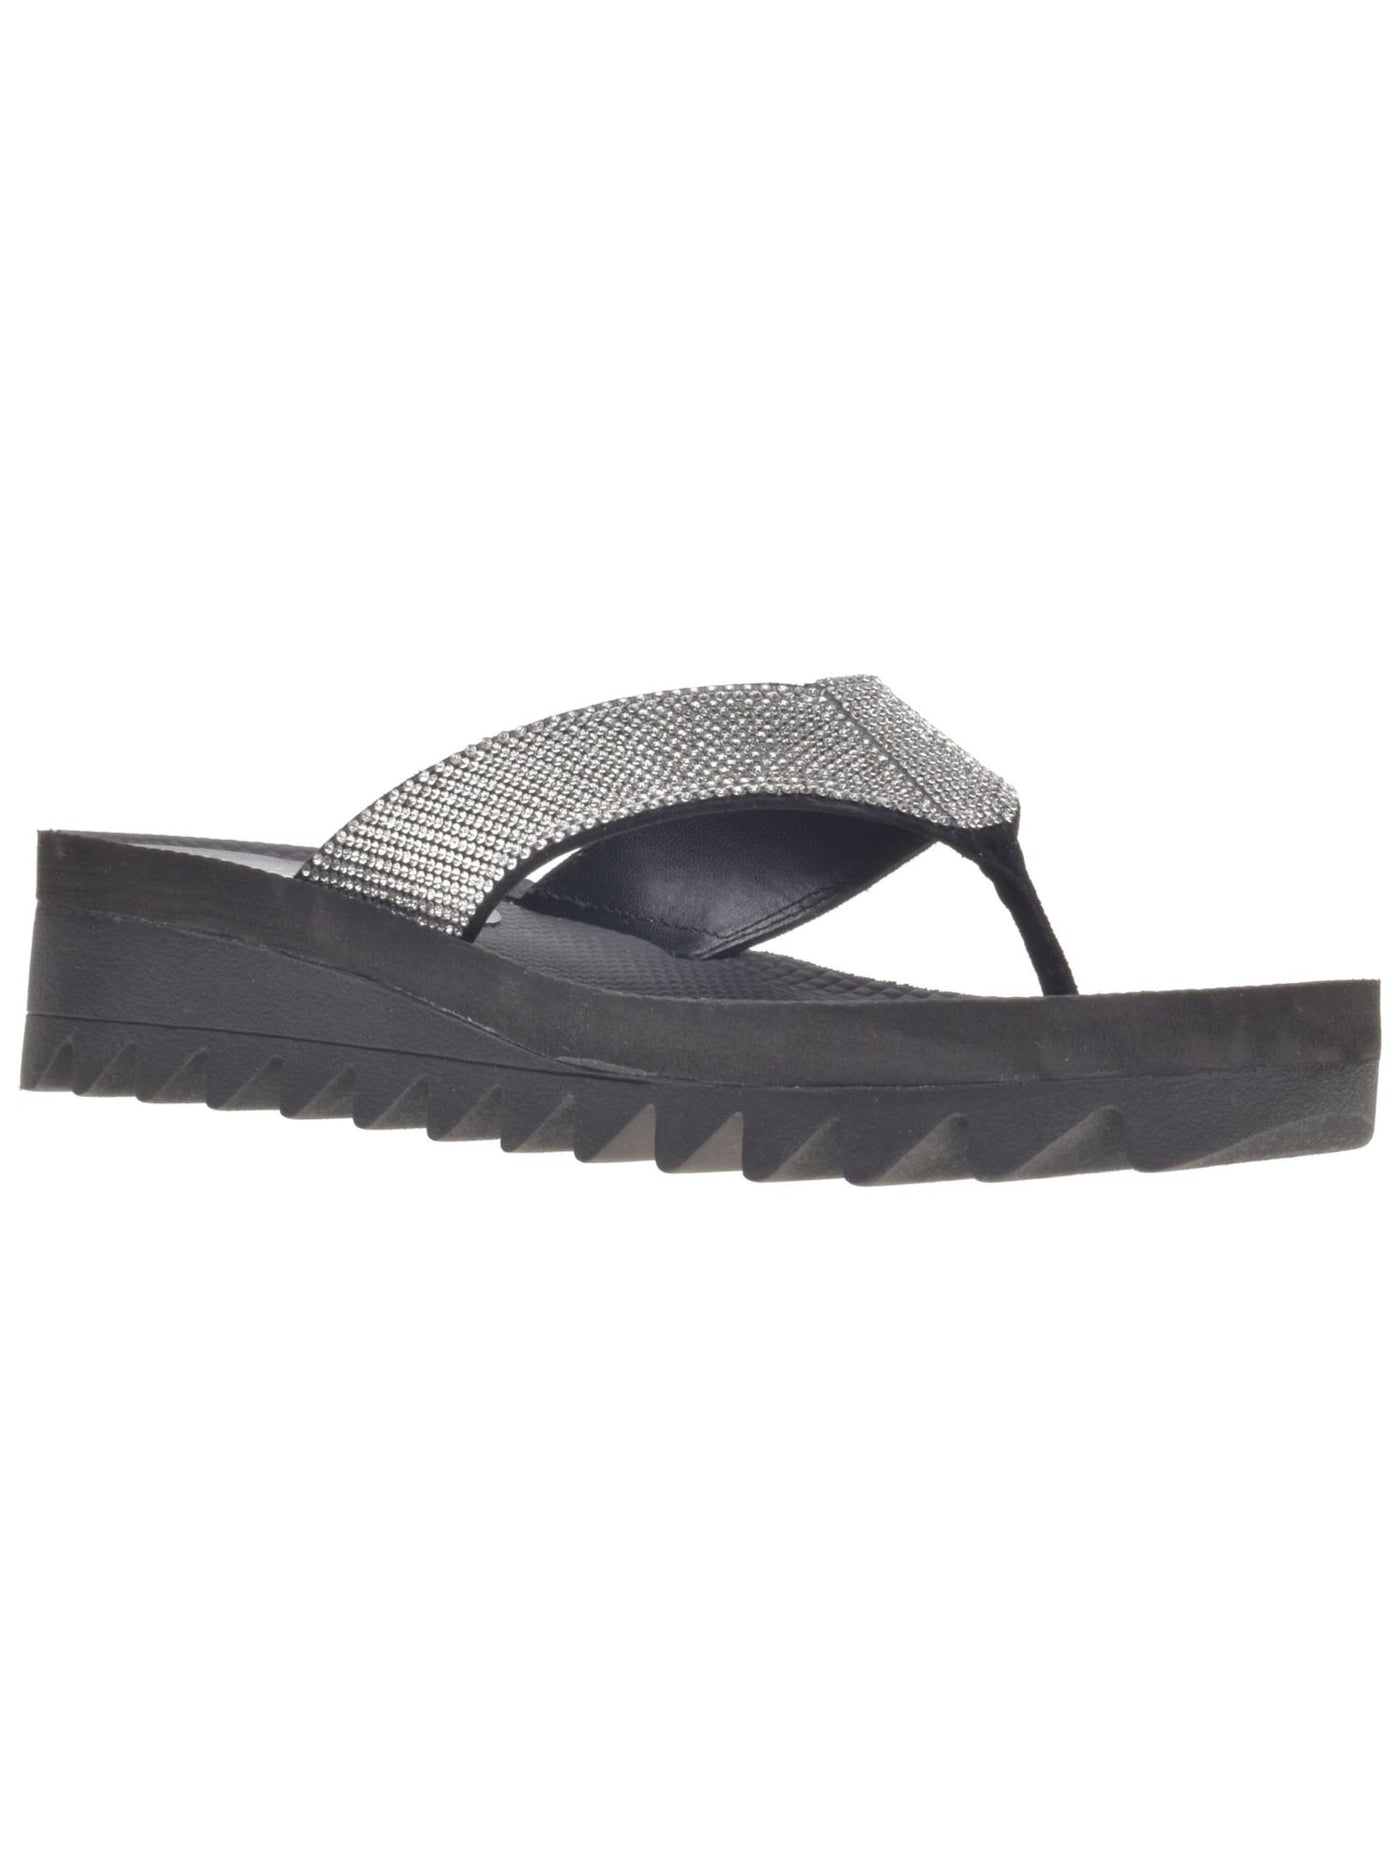 WILD PAIR Womens Black Saw Tooth Sole Rhinestone Kalabasas Round Toe Wedge Slip On Thong Sandals Shoes 8.5 M